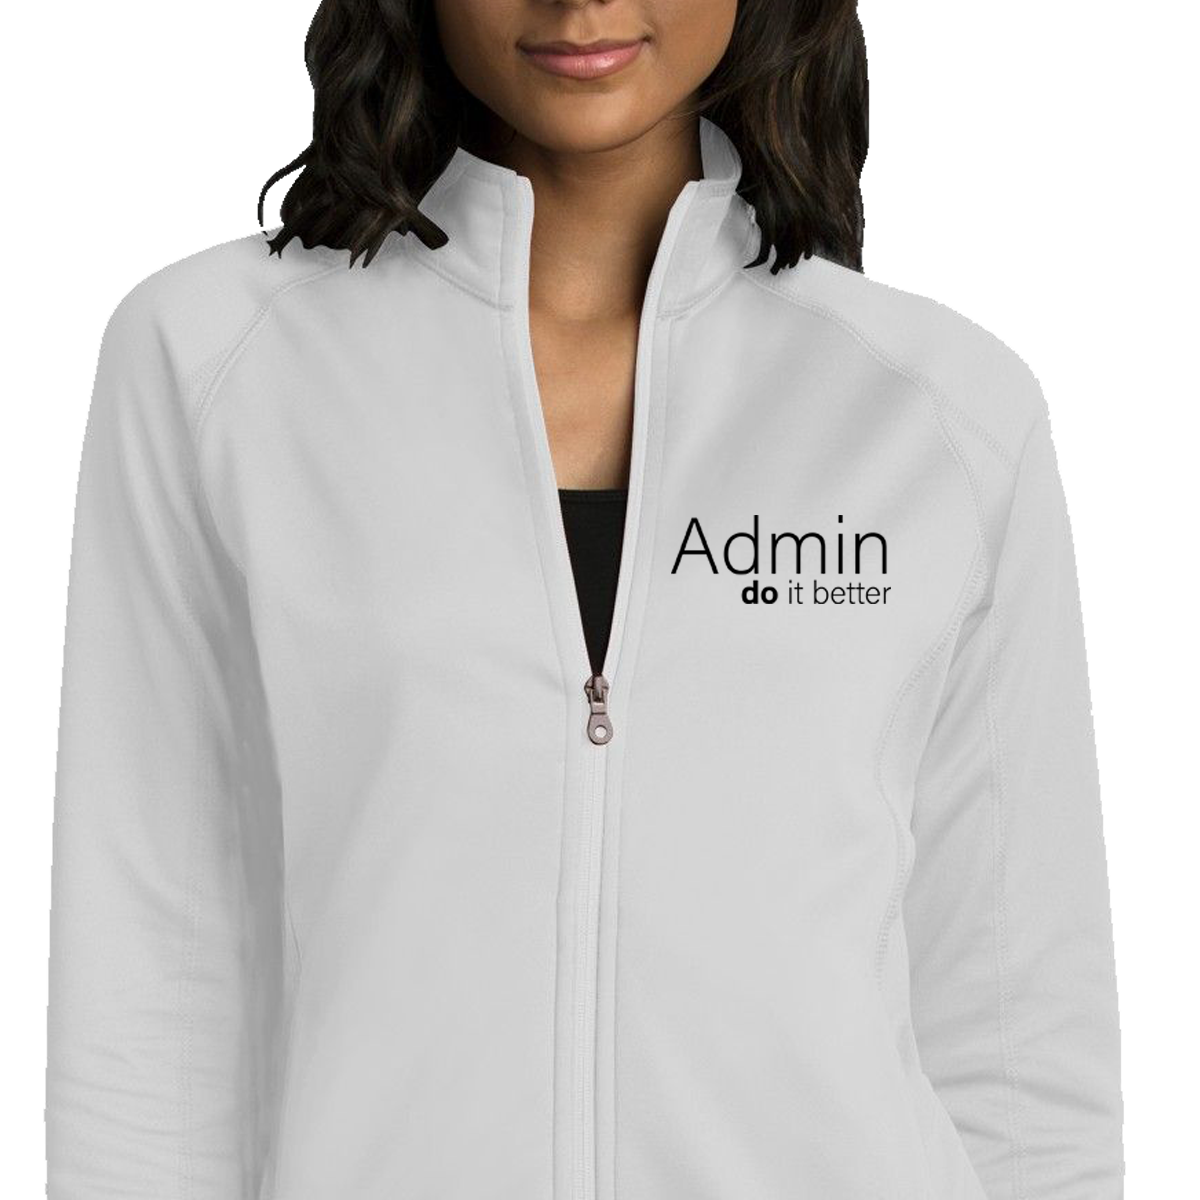 AI-ADAP-3271-womensbrushedbackmicrofleecefullzipjacket-APP#-admindoitbetter-1color